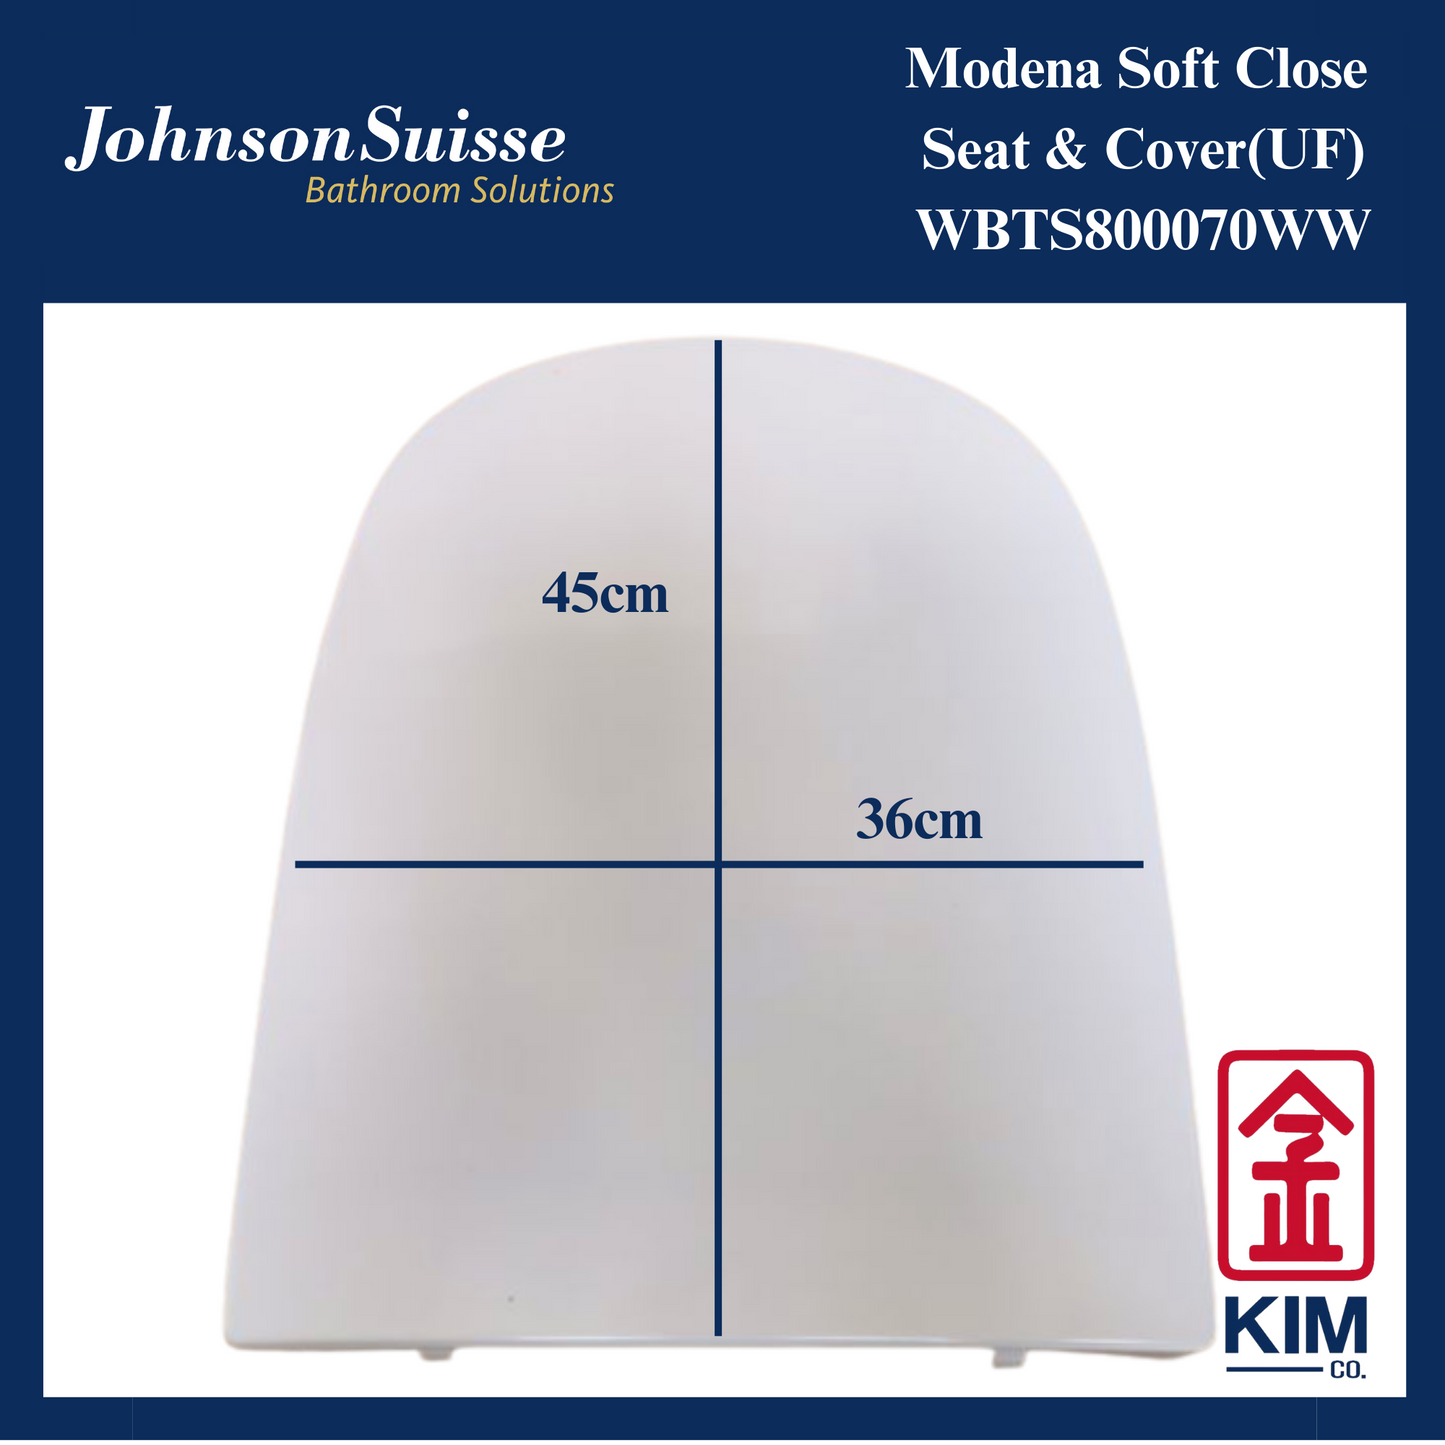 Johnson Suisse Modena Soft Close Seat & Cover (UF)(WBTS800070WW)